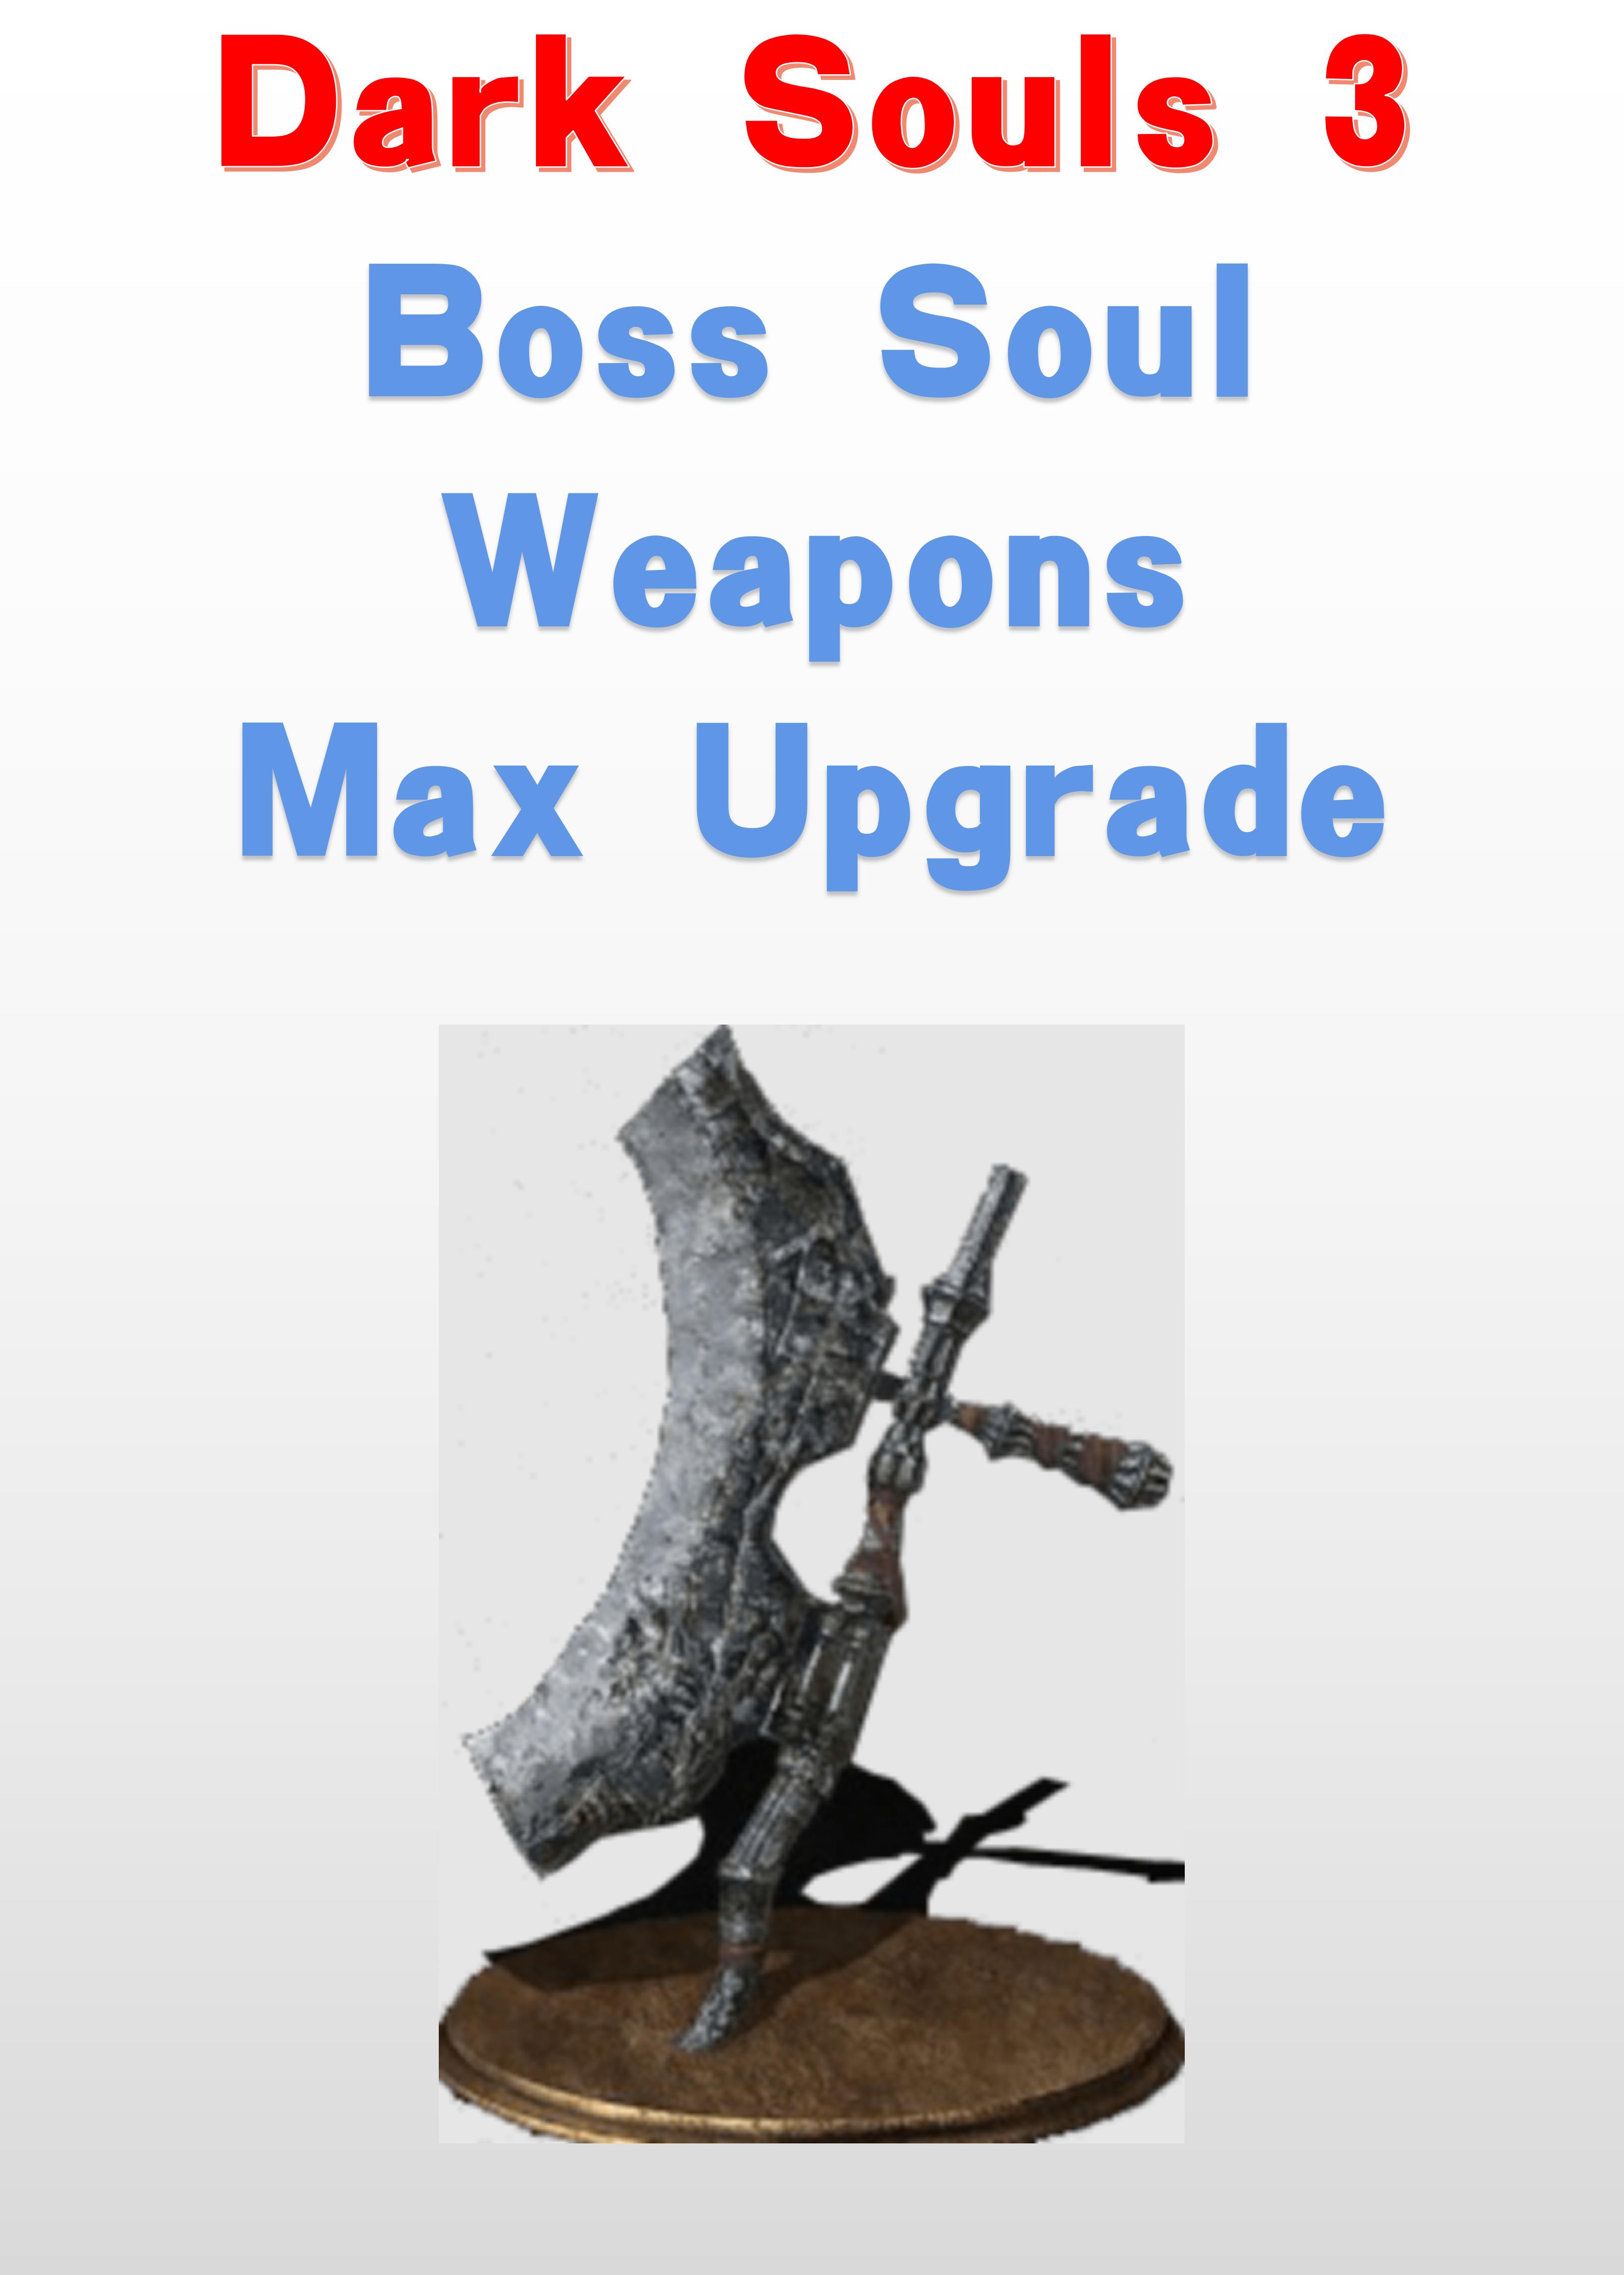 Boss Soul Weapons Max Upgrade - Dark Souls 3